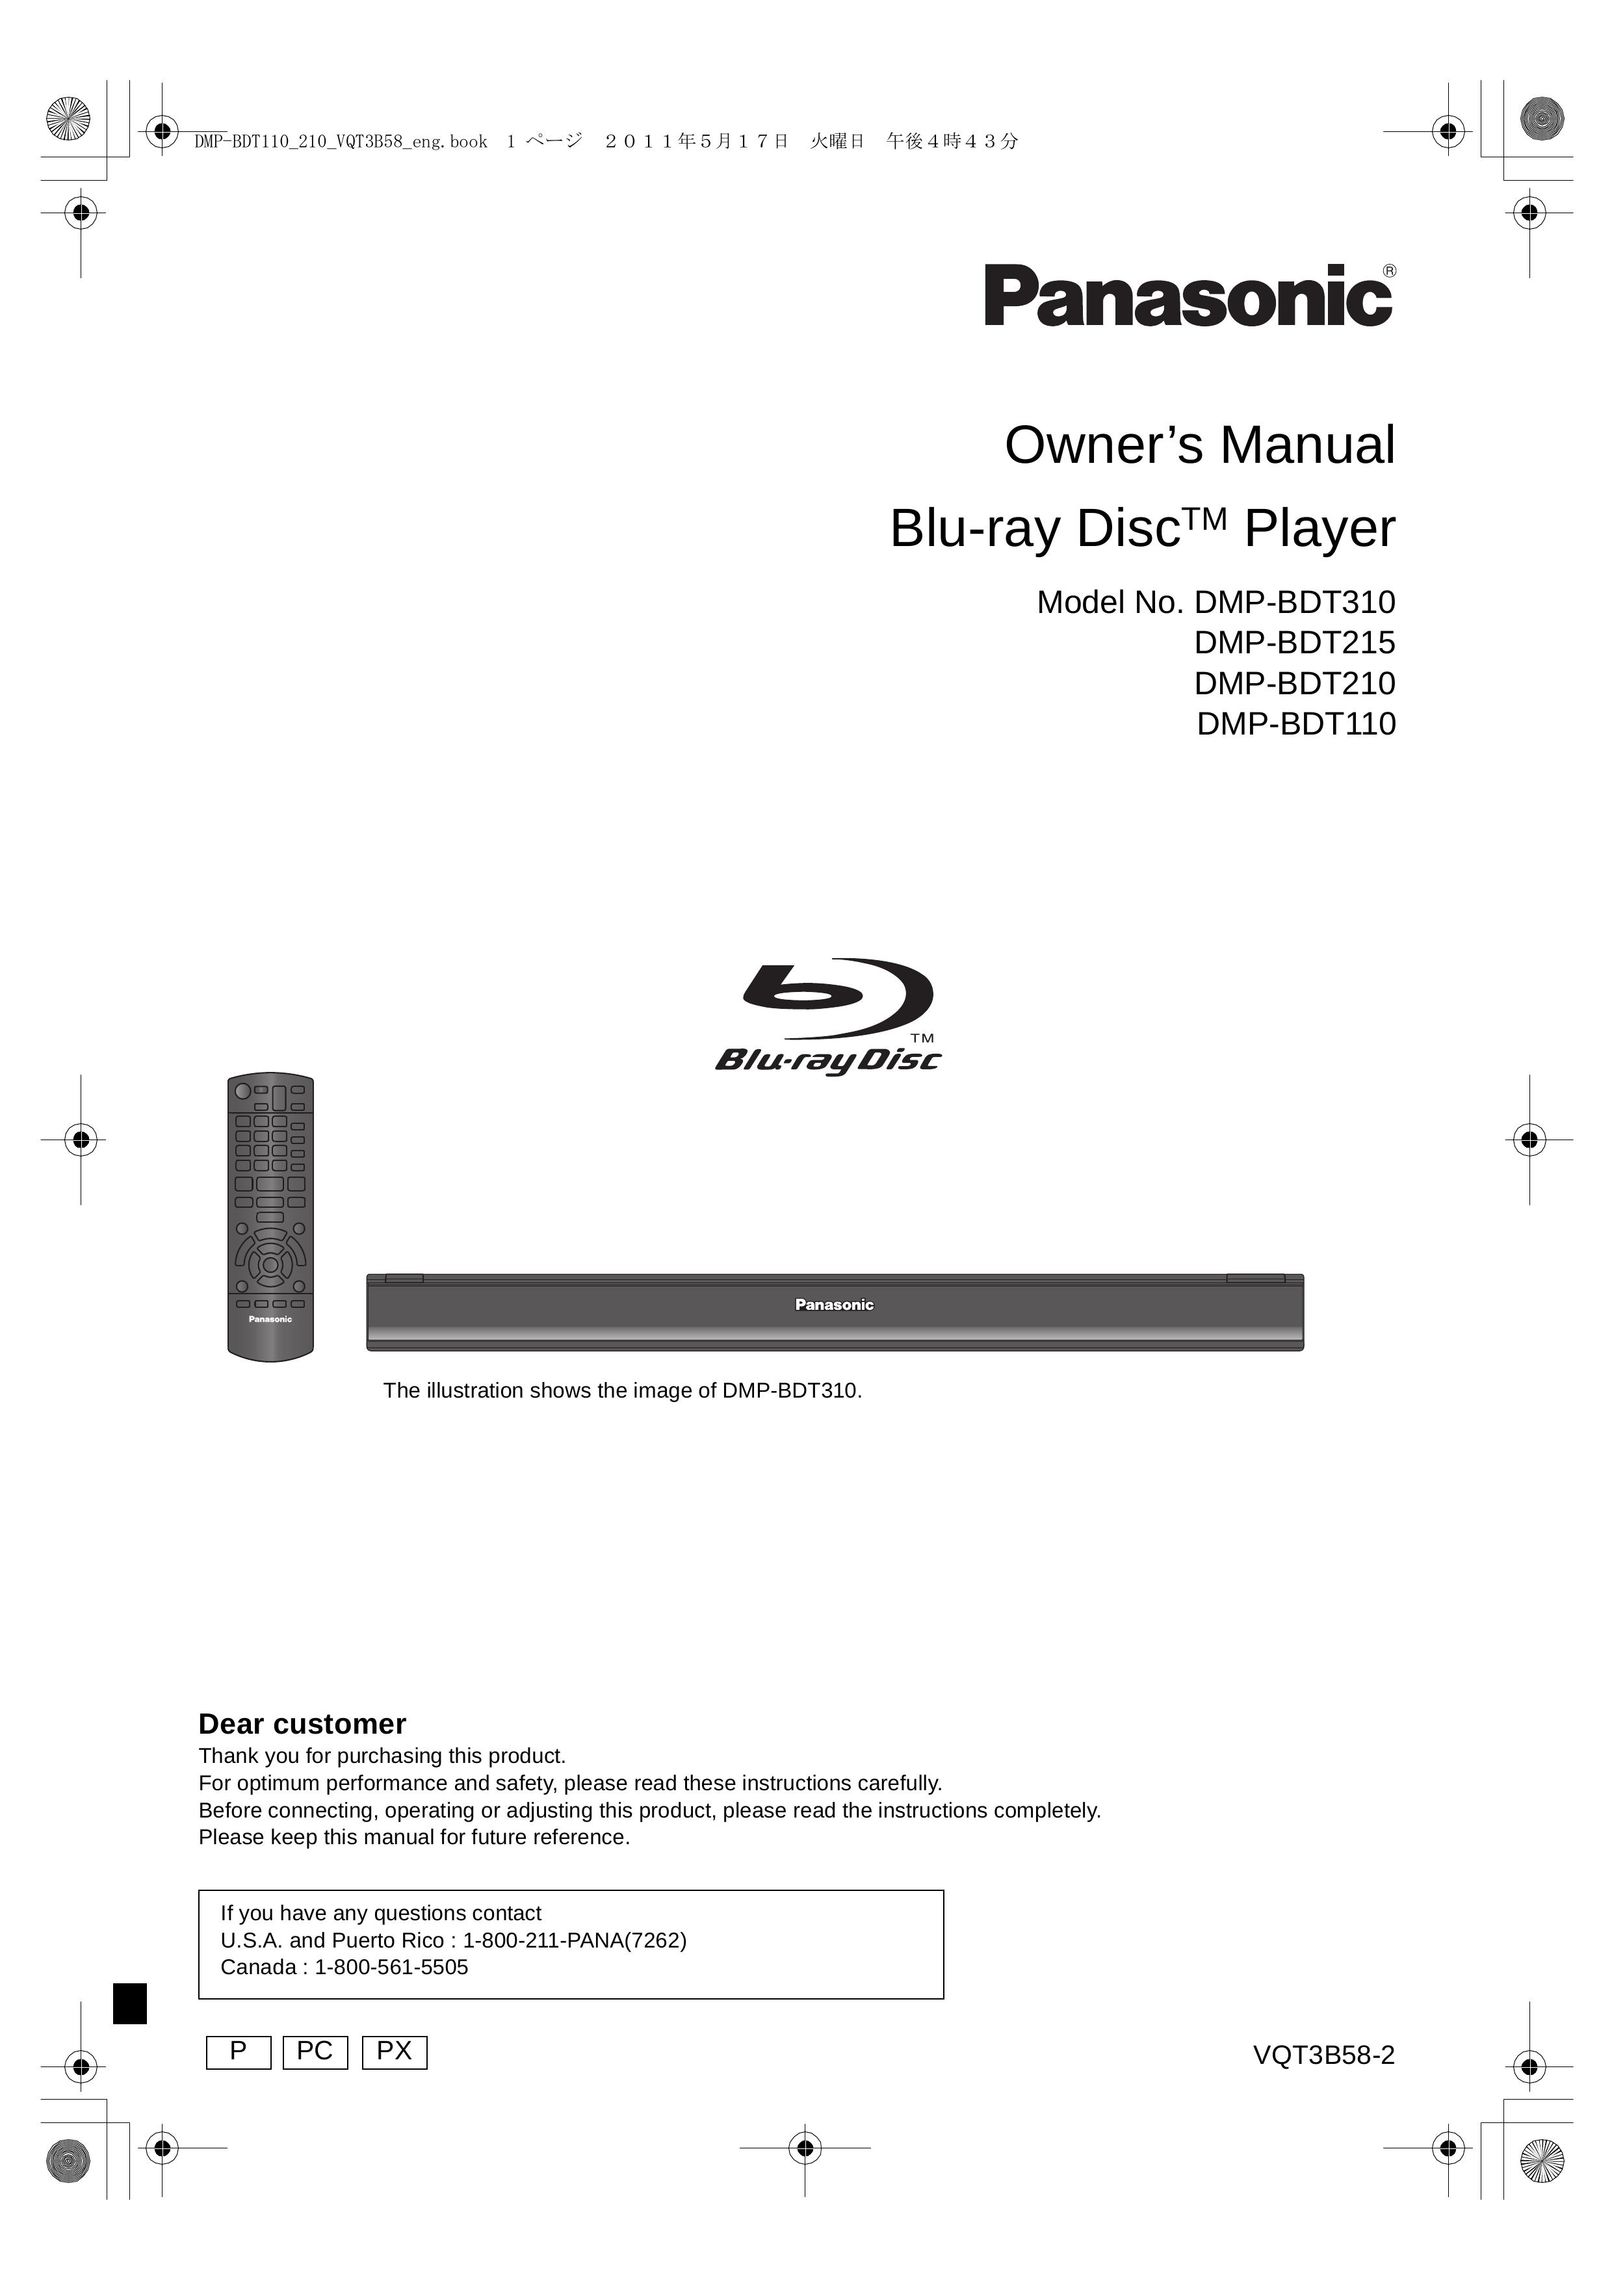 Panasonic DMP-BDT310 DVD Player User Manual